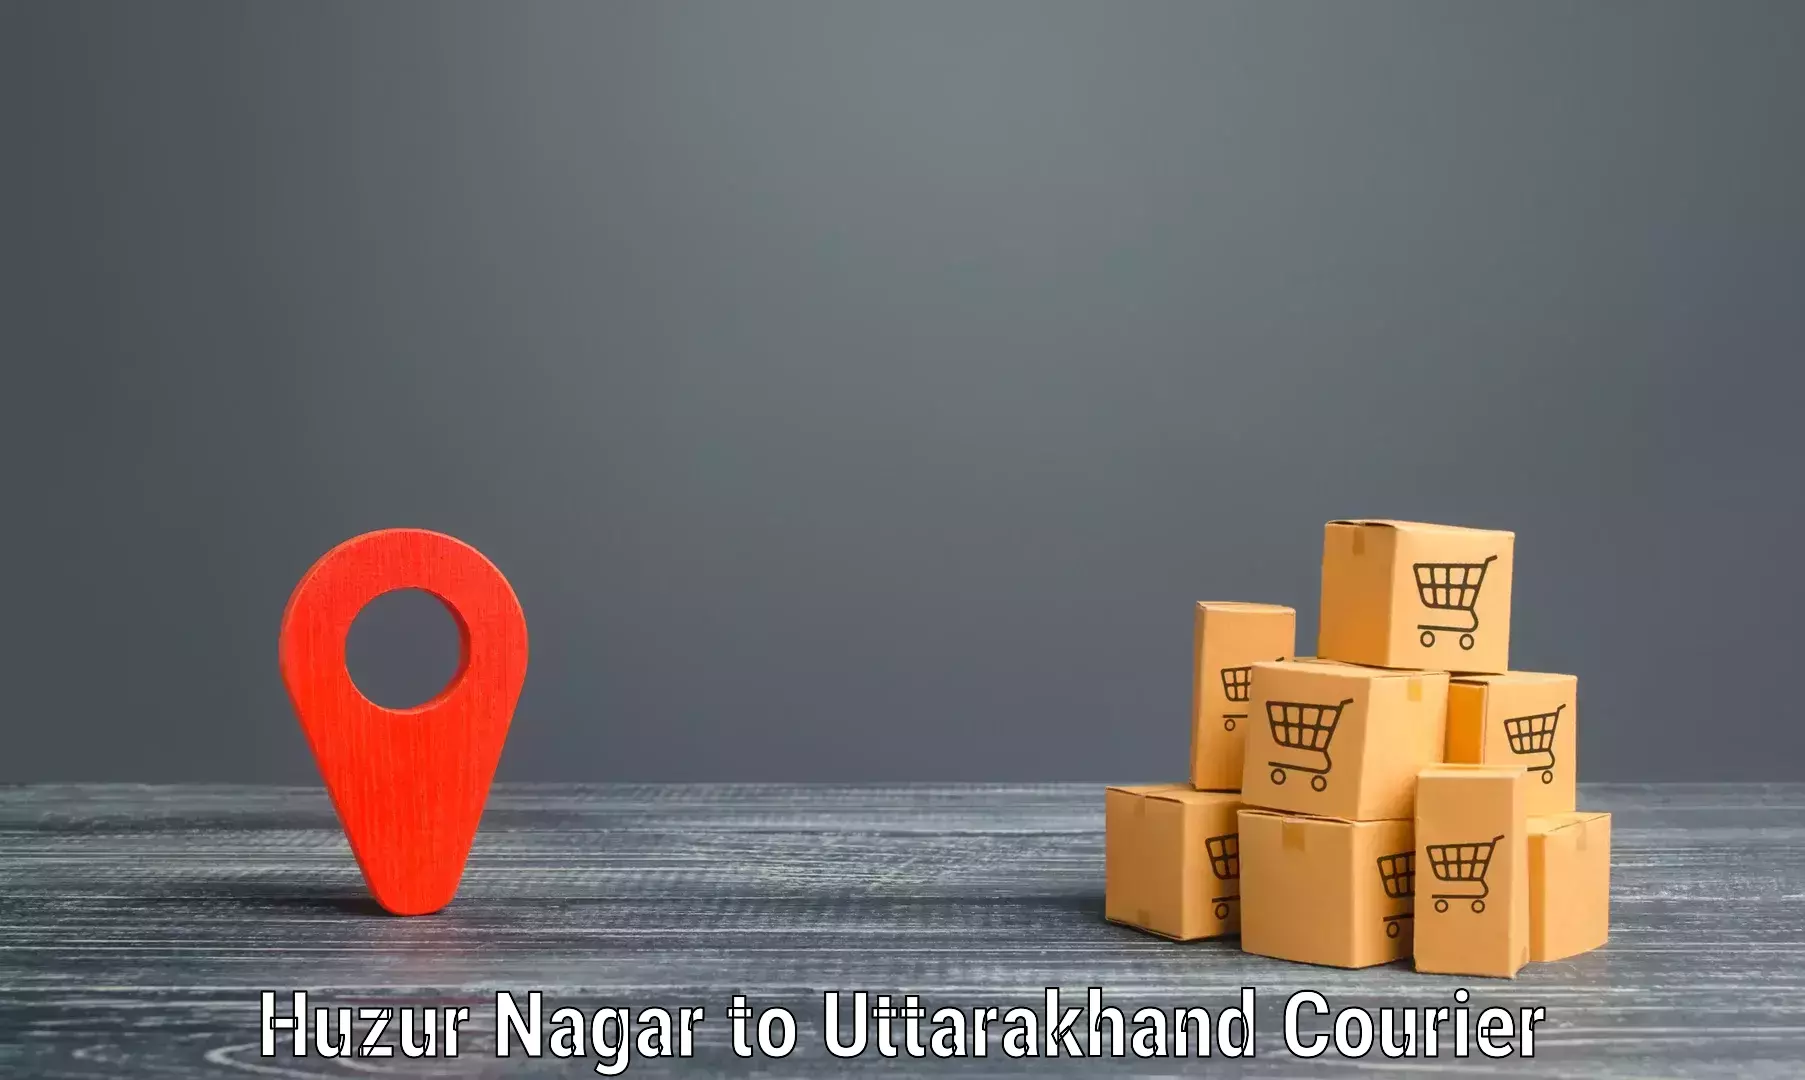 Express delivery network Huzur Nagar to Doiwala